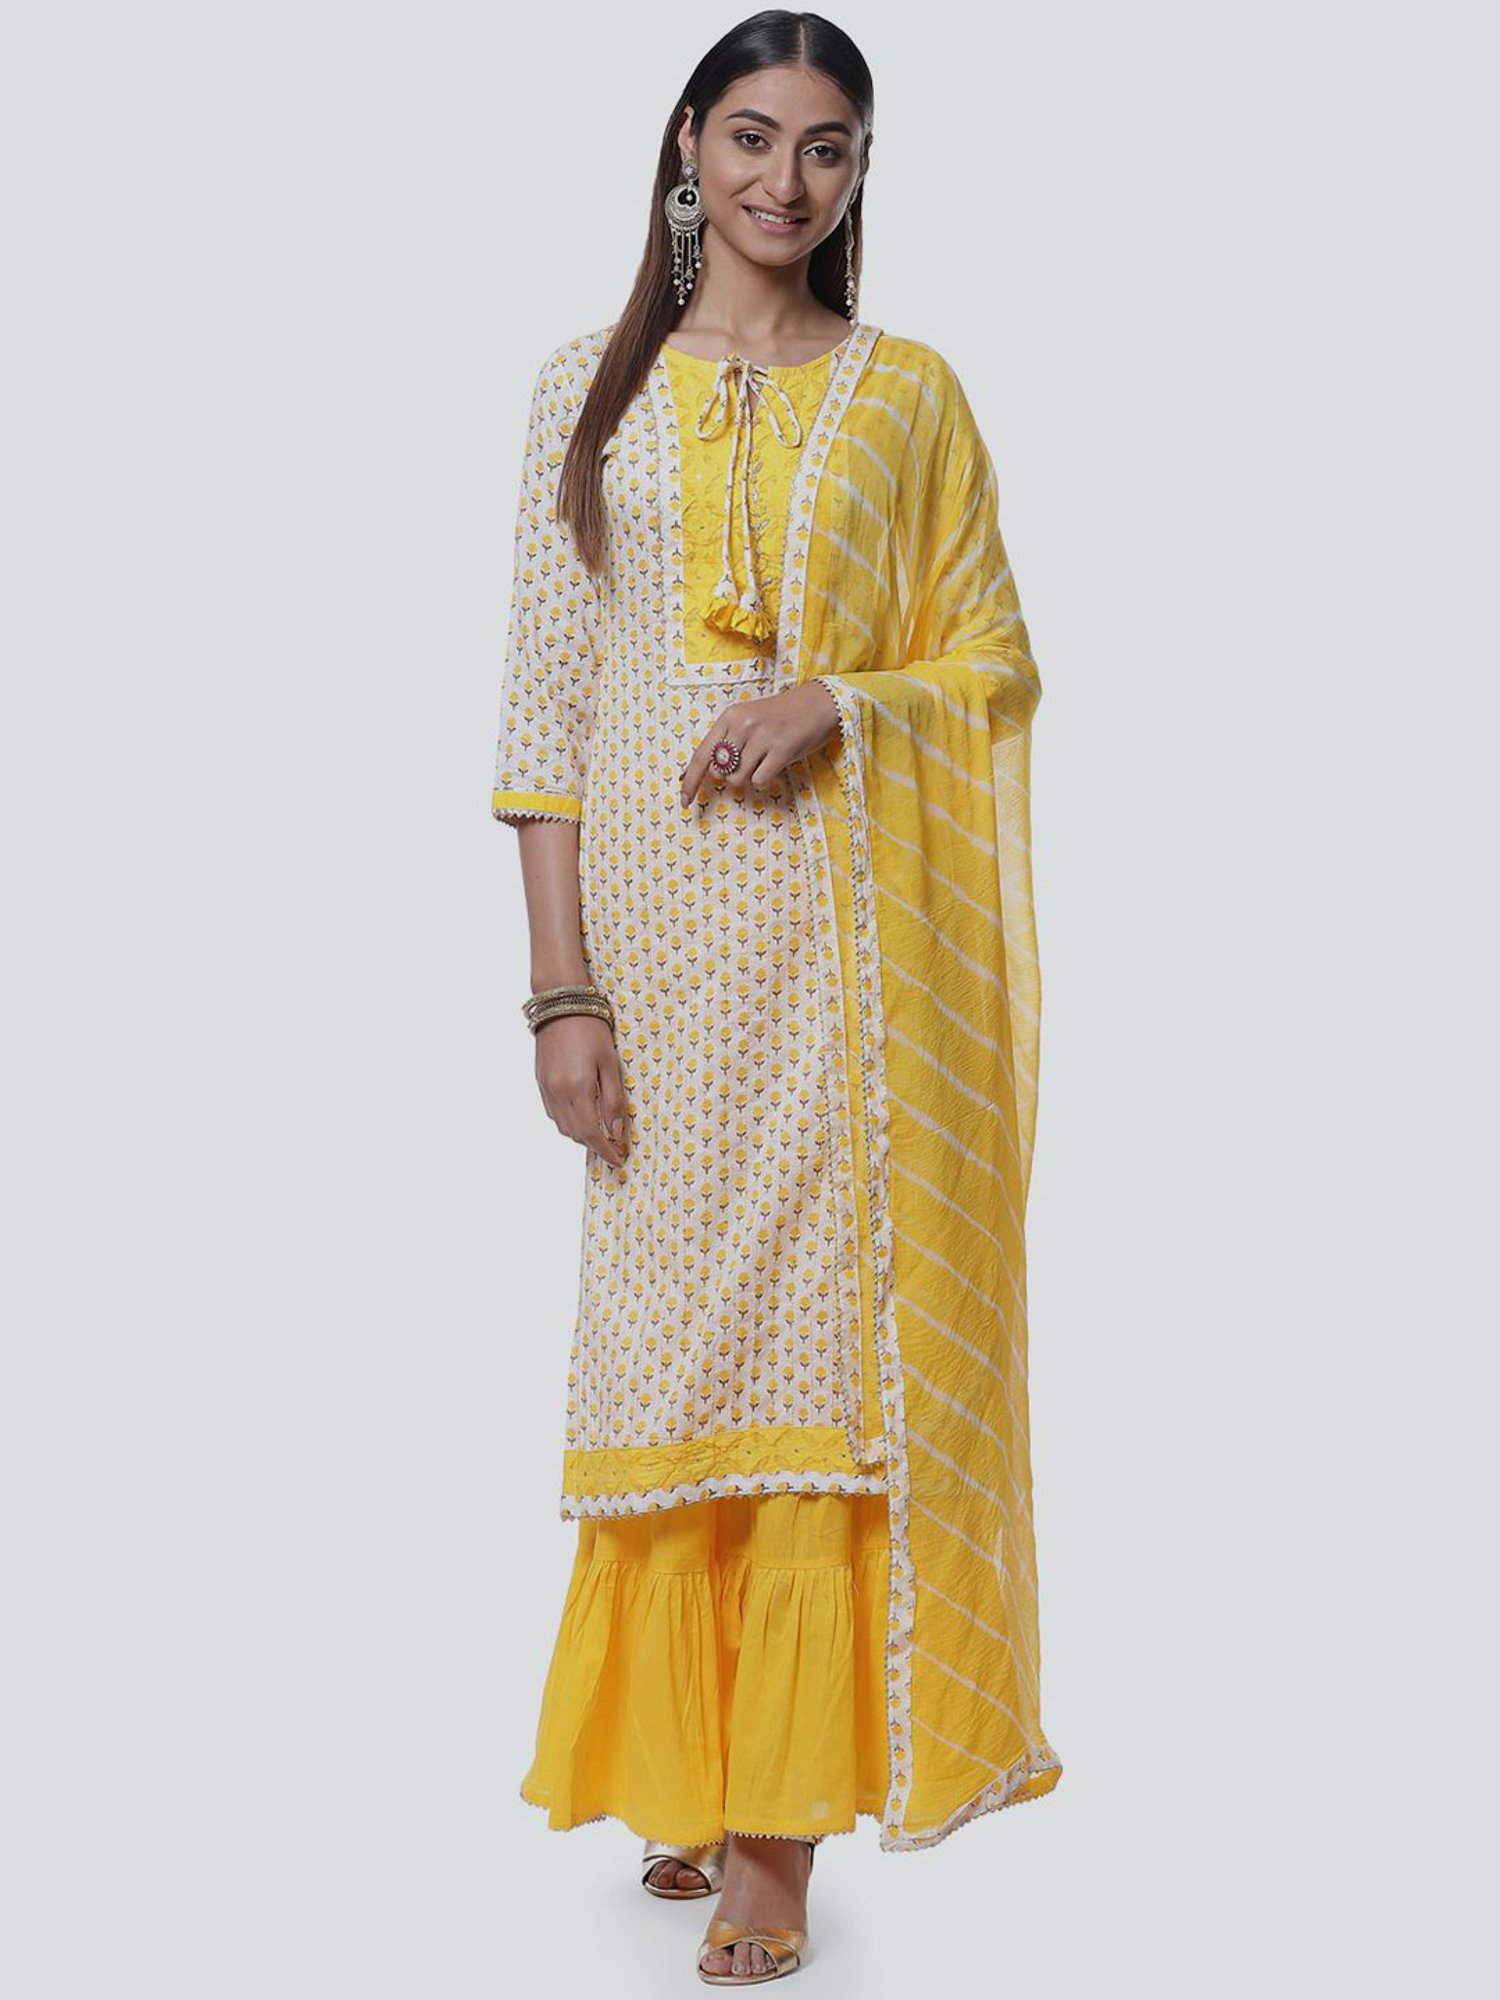 Biba Salwar on Shoppers Stop | Indian dresses, Dress, Indian wear